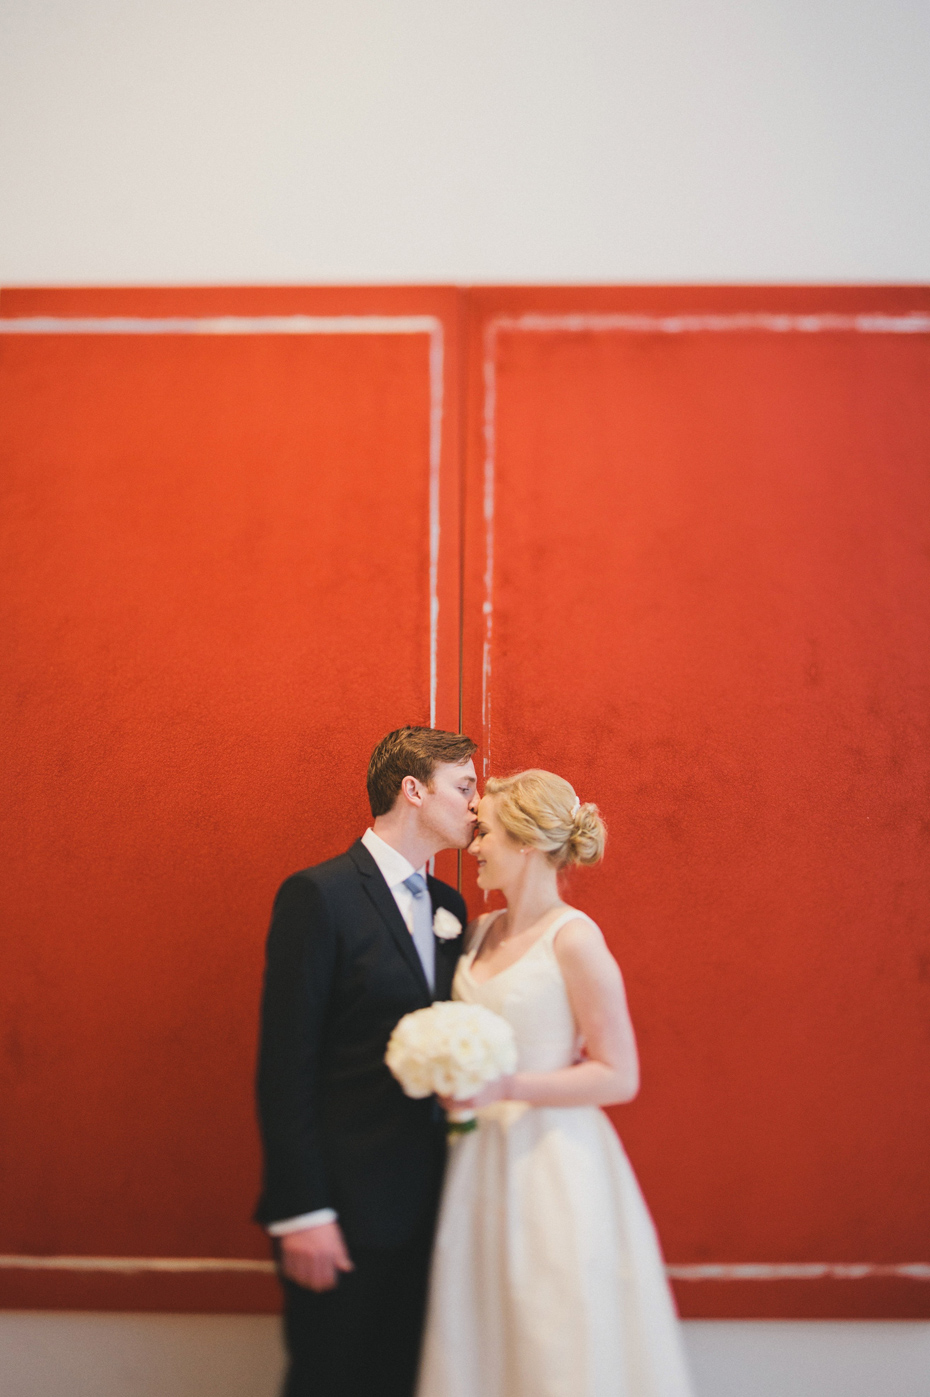 A bride and groom portrait at UMMA in Ann Arbor, shot by wedding photographer Heather Jowett